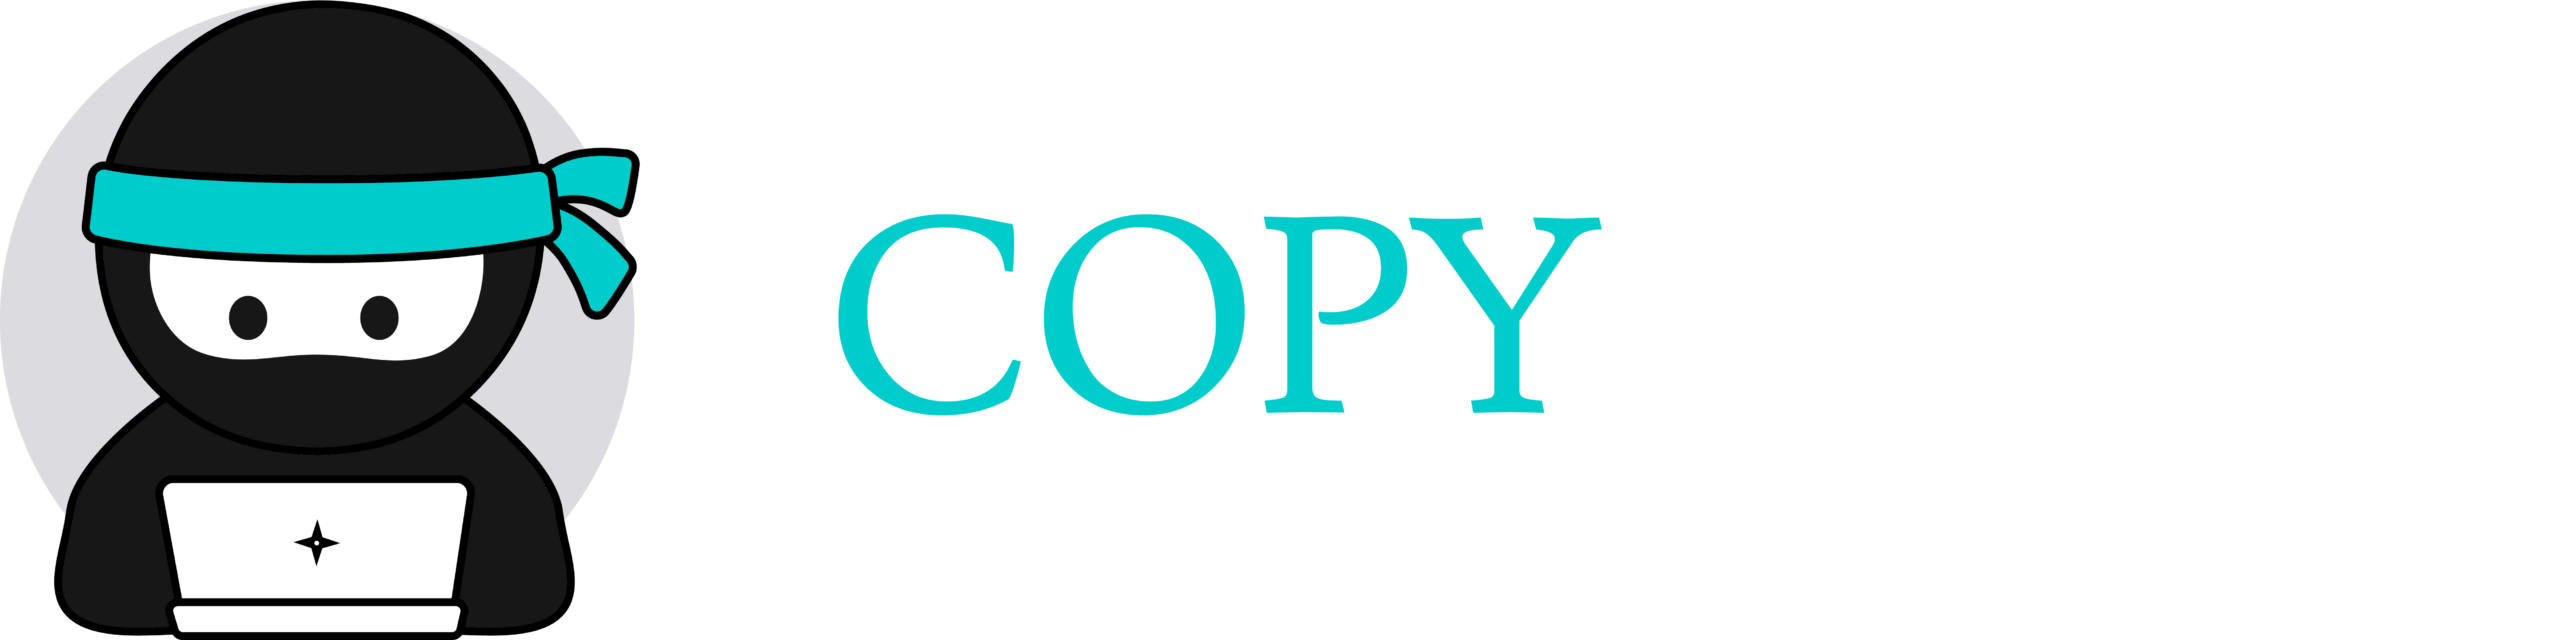 CopyNinjas_Full-Logo-2-01.png